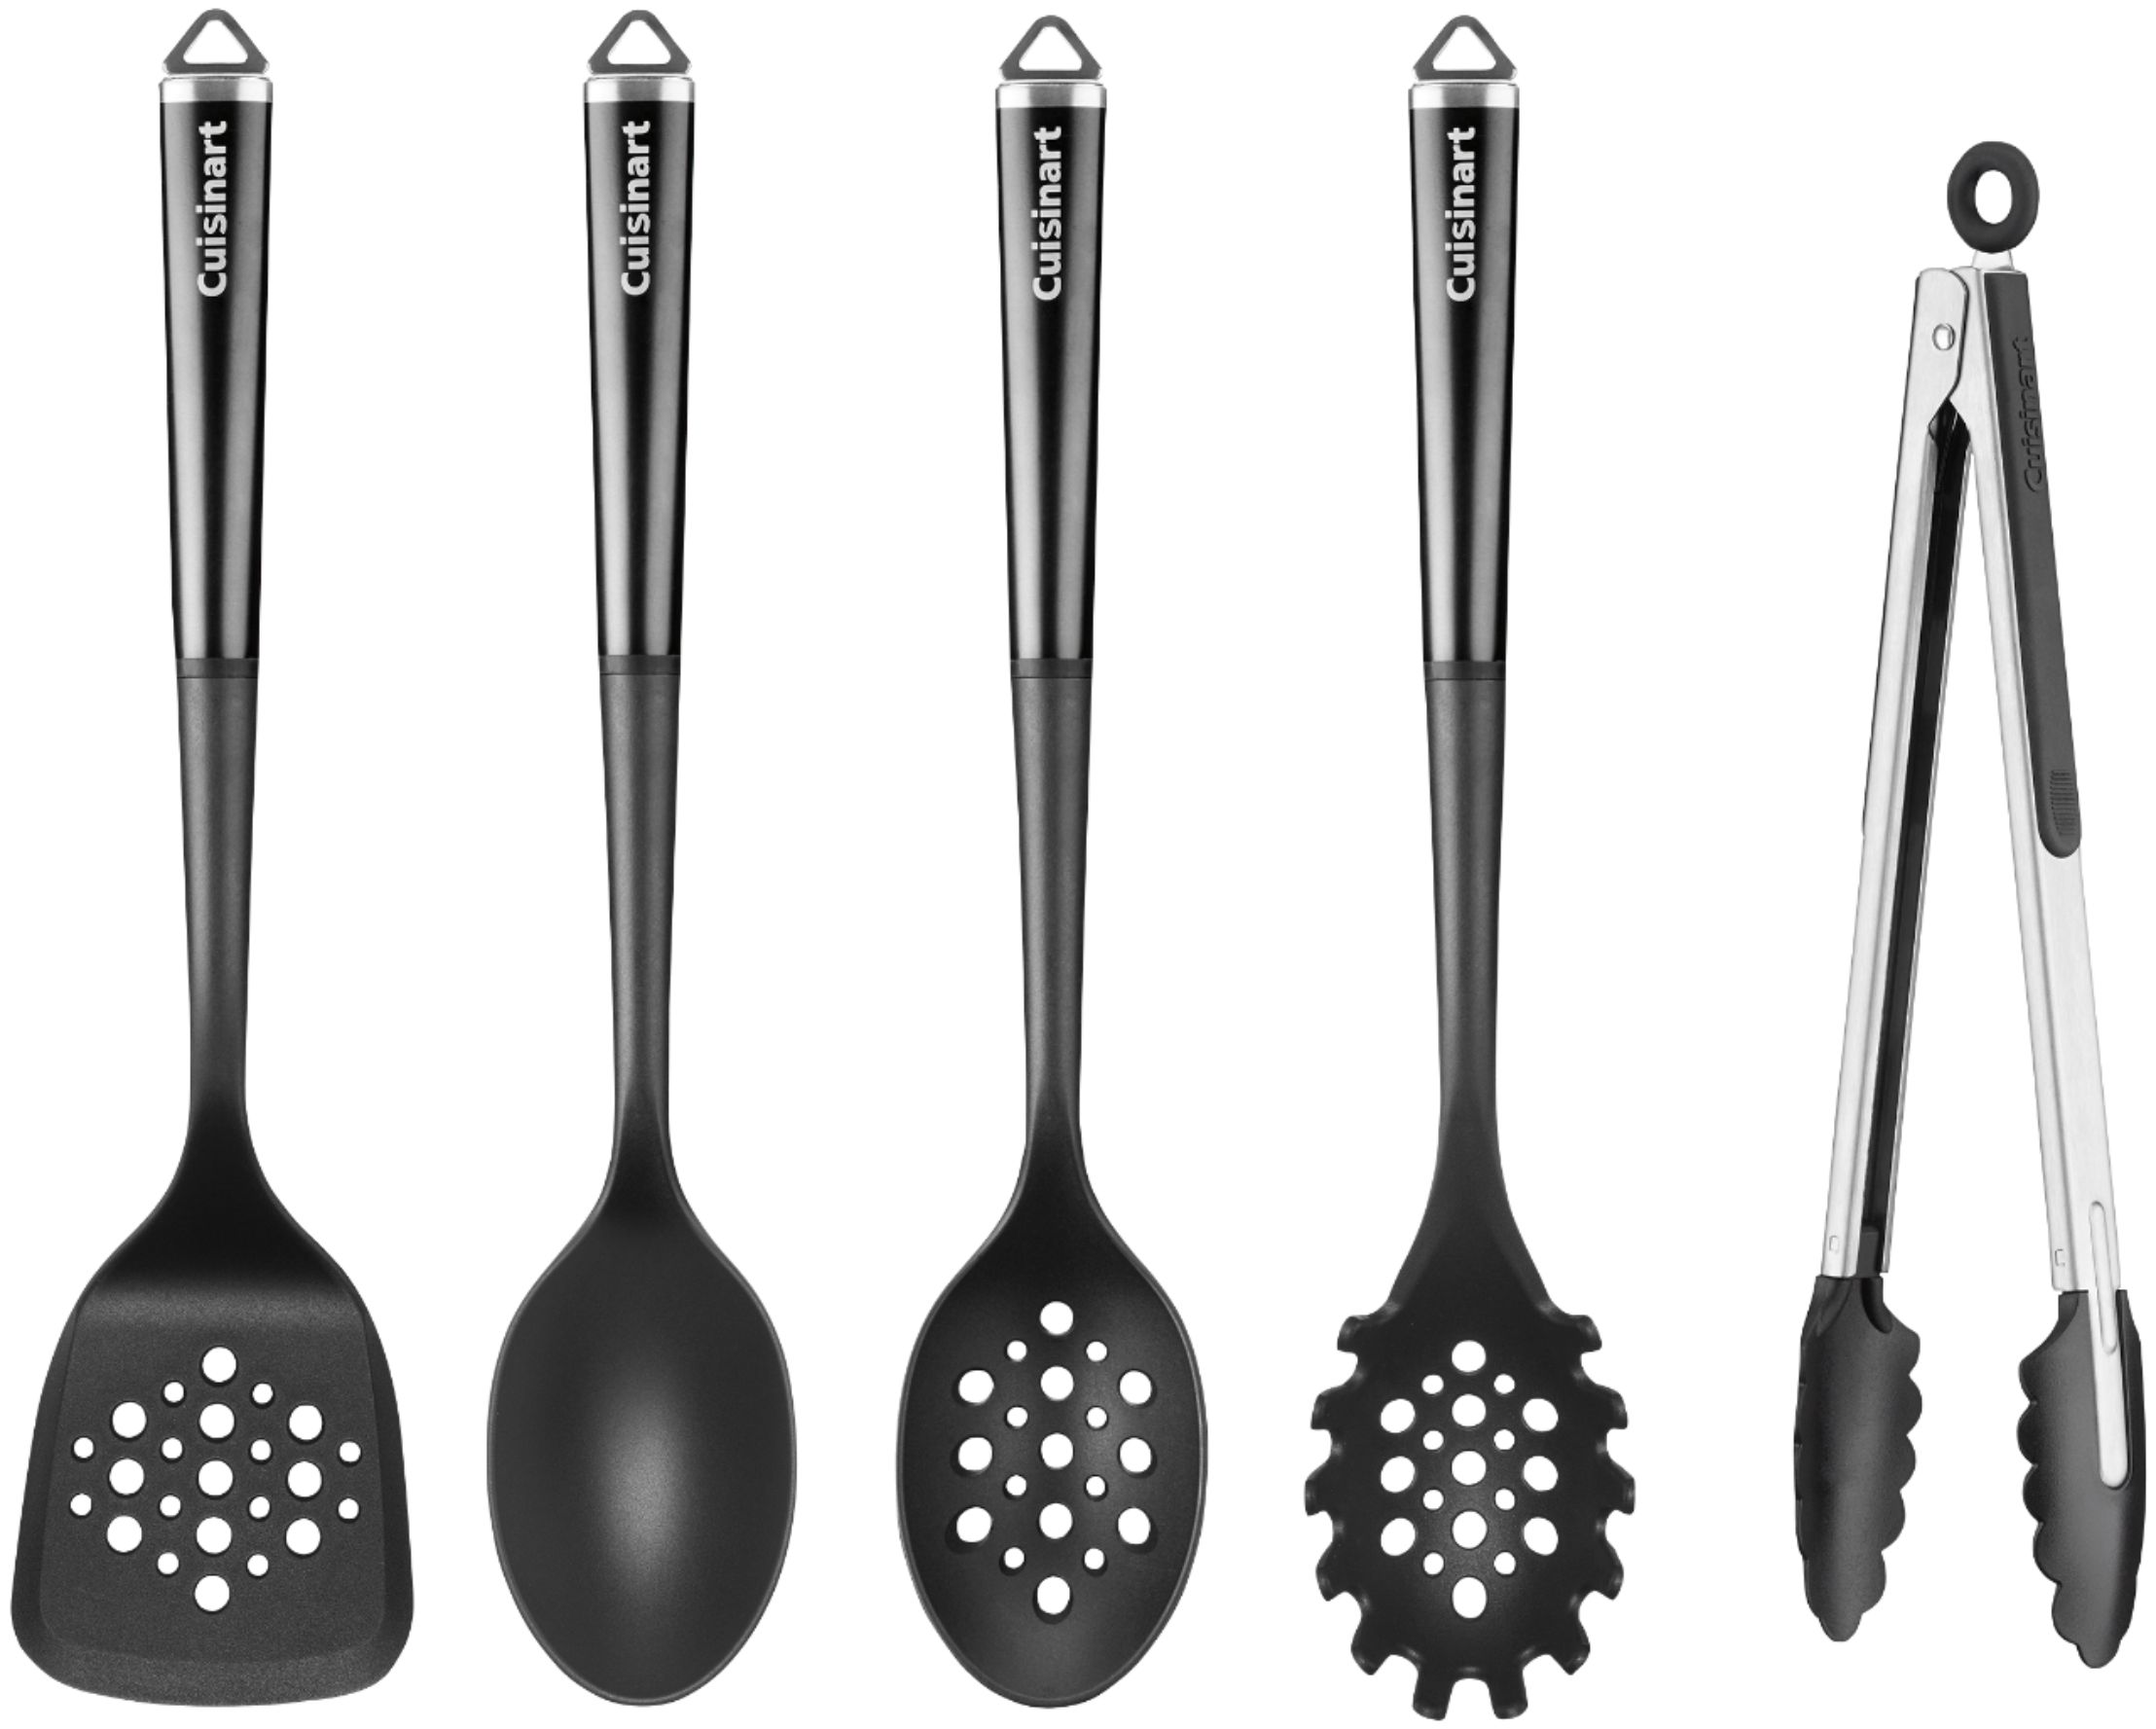 Cuisinart® Kitchen Tools & Gadgets Set, 11 pc - Fry's Food Stores